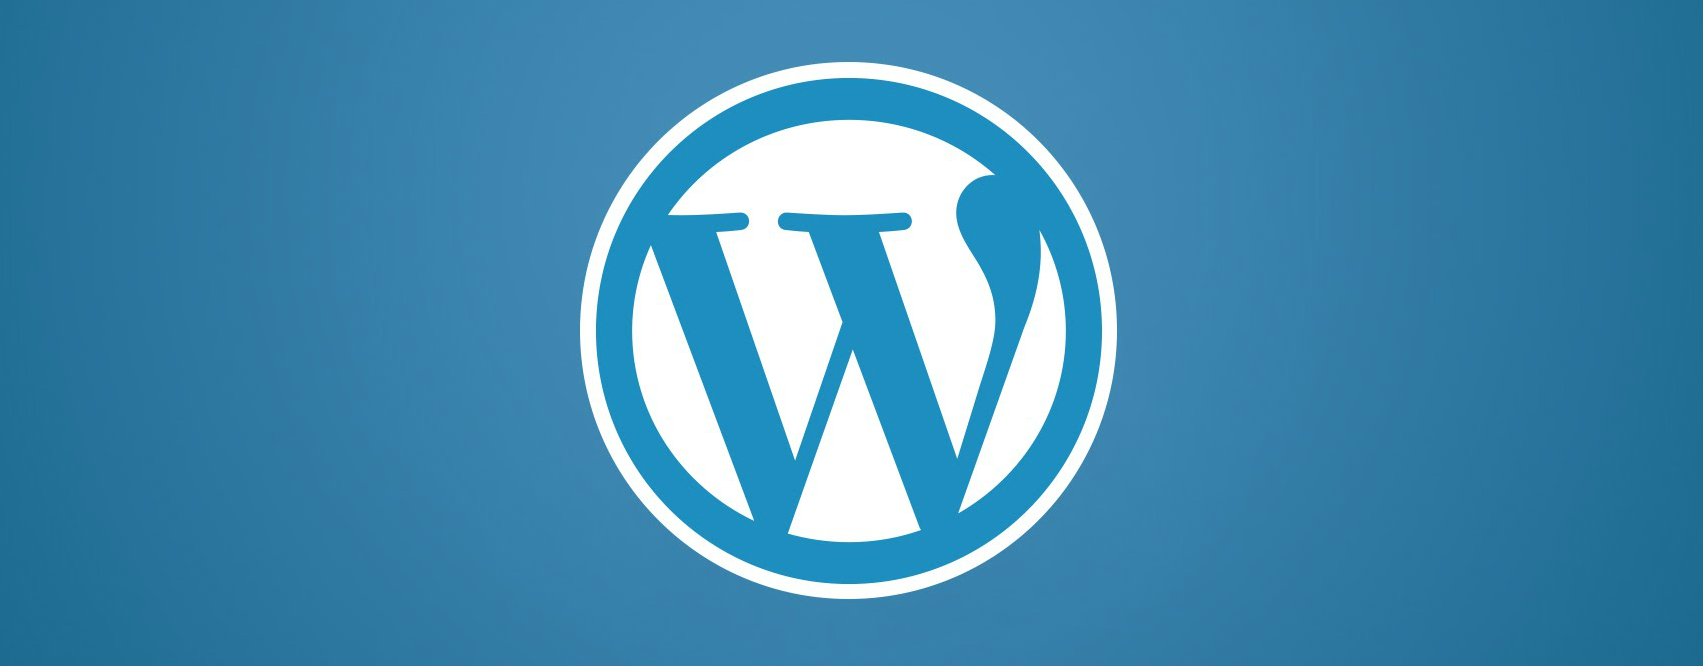 New WordPress theme